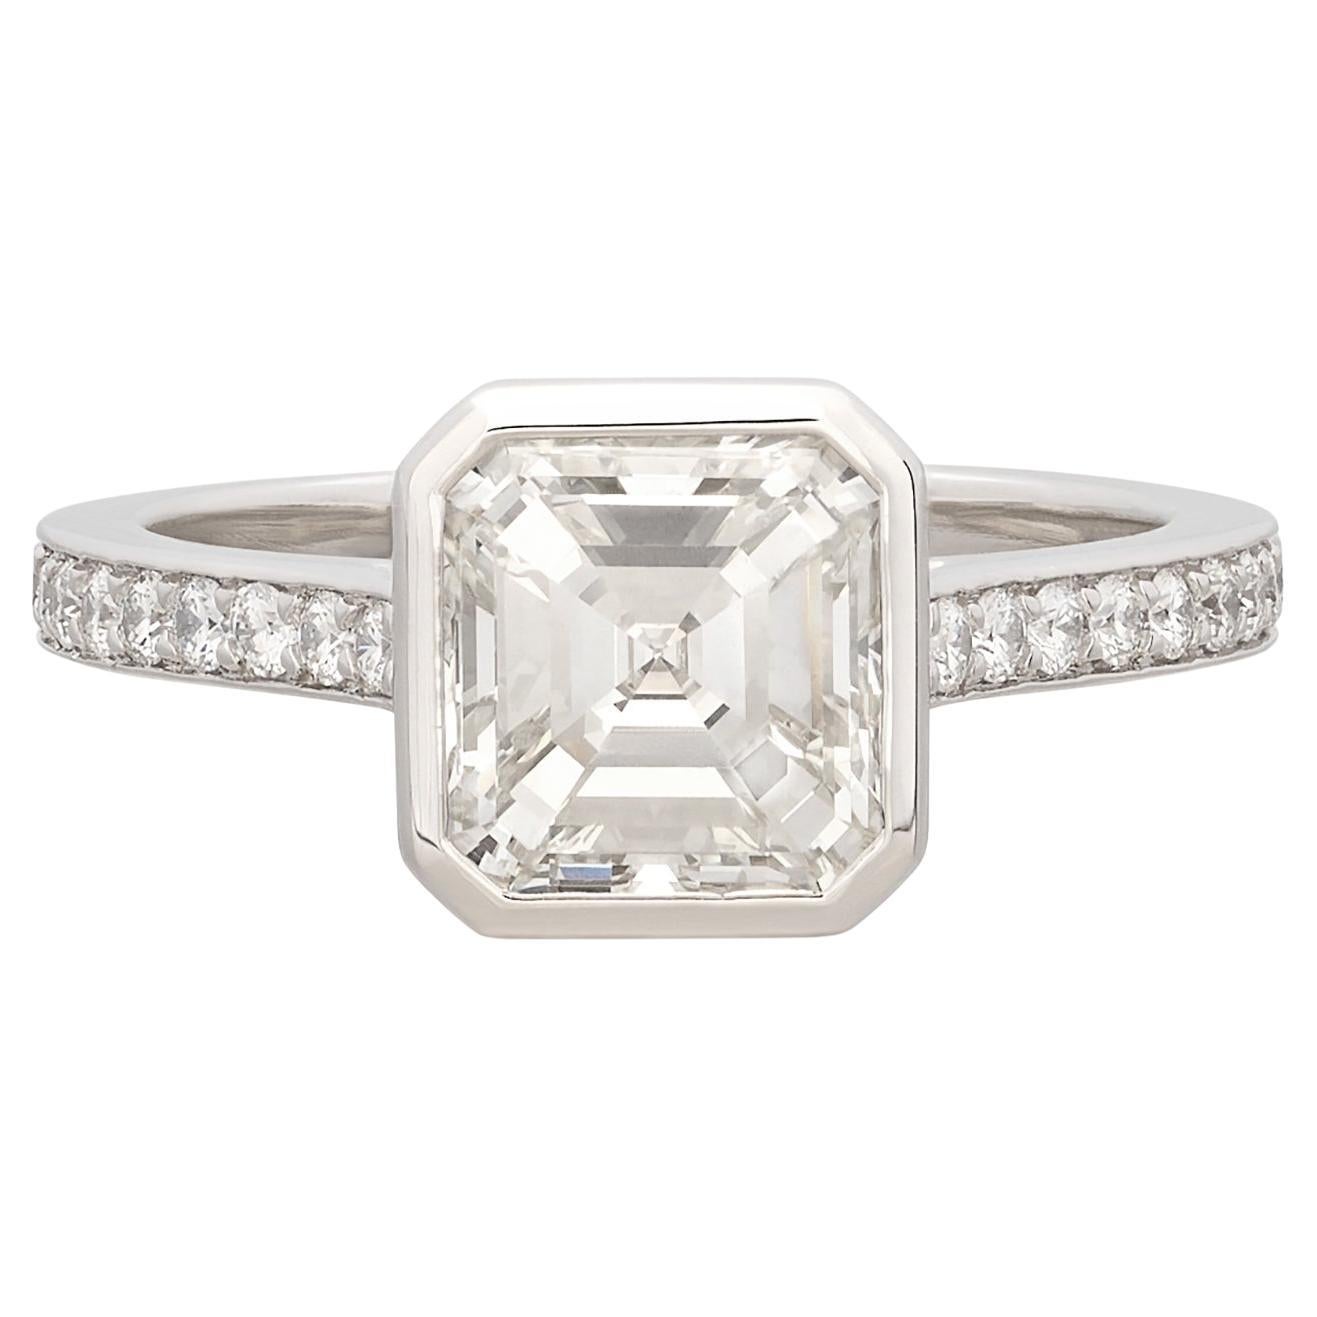 Phenomenal 2.14ct Asscher Cut Platinum Diamond Ring For Sale